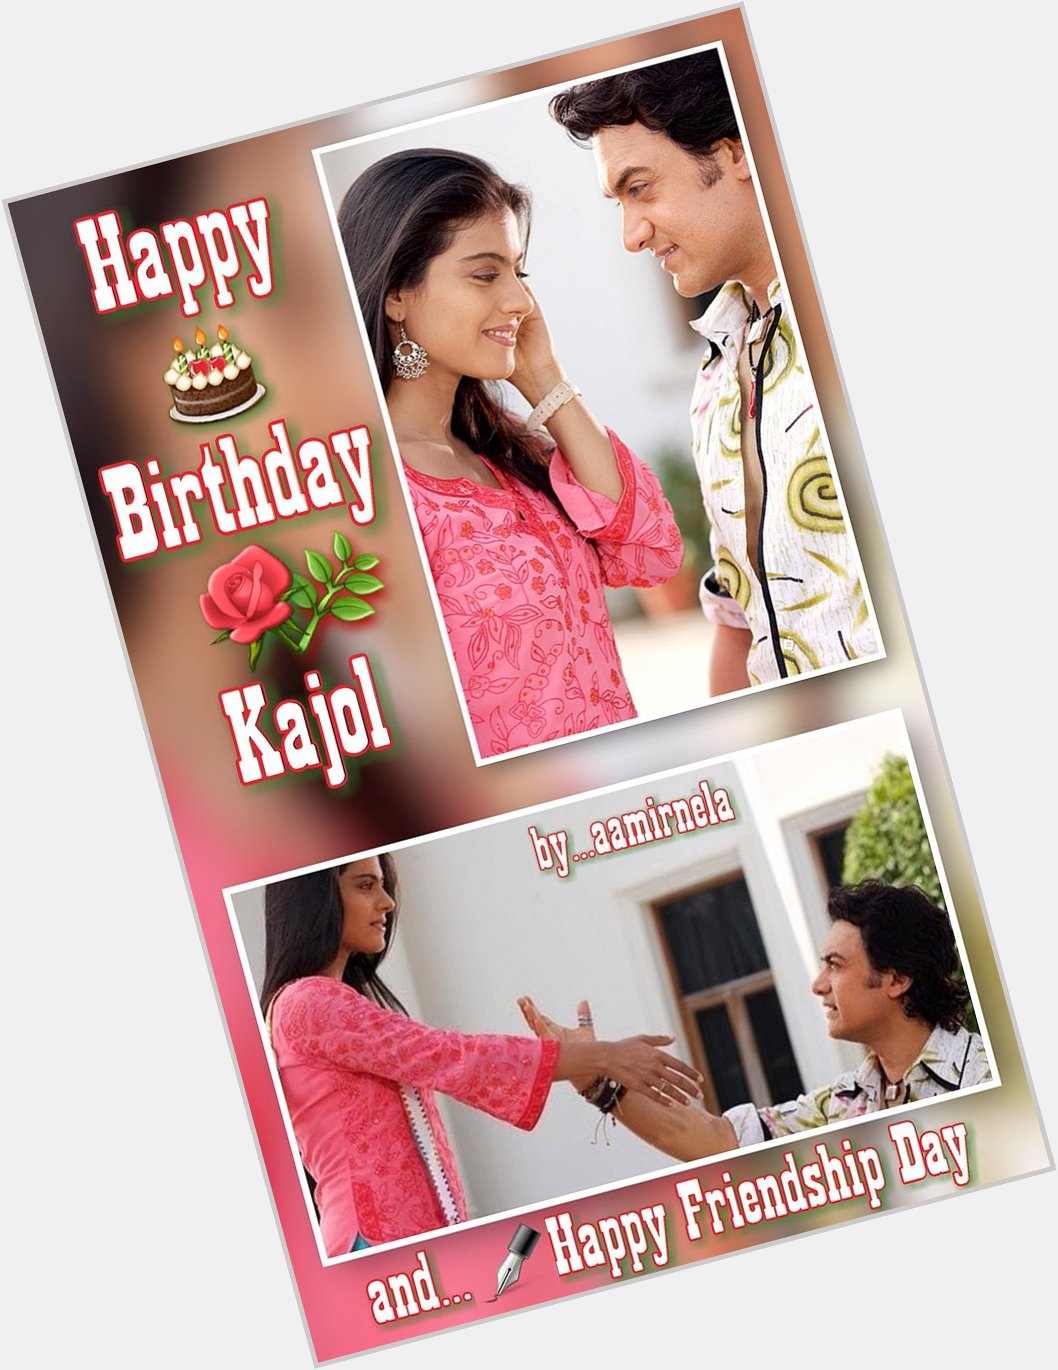 Happy Birthday Kajol   ...and Happy Friendship Day ... 